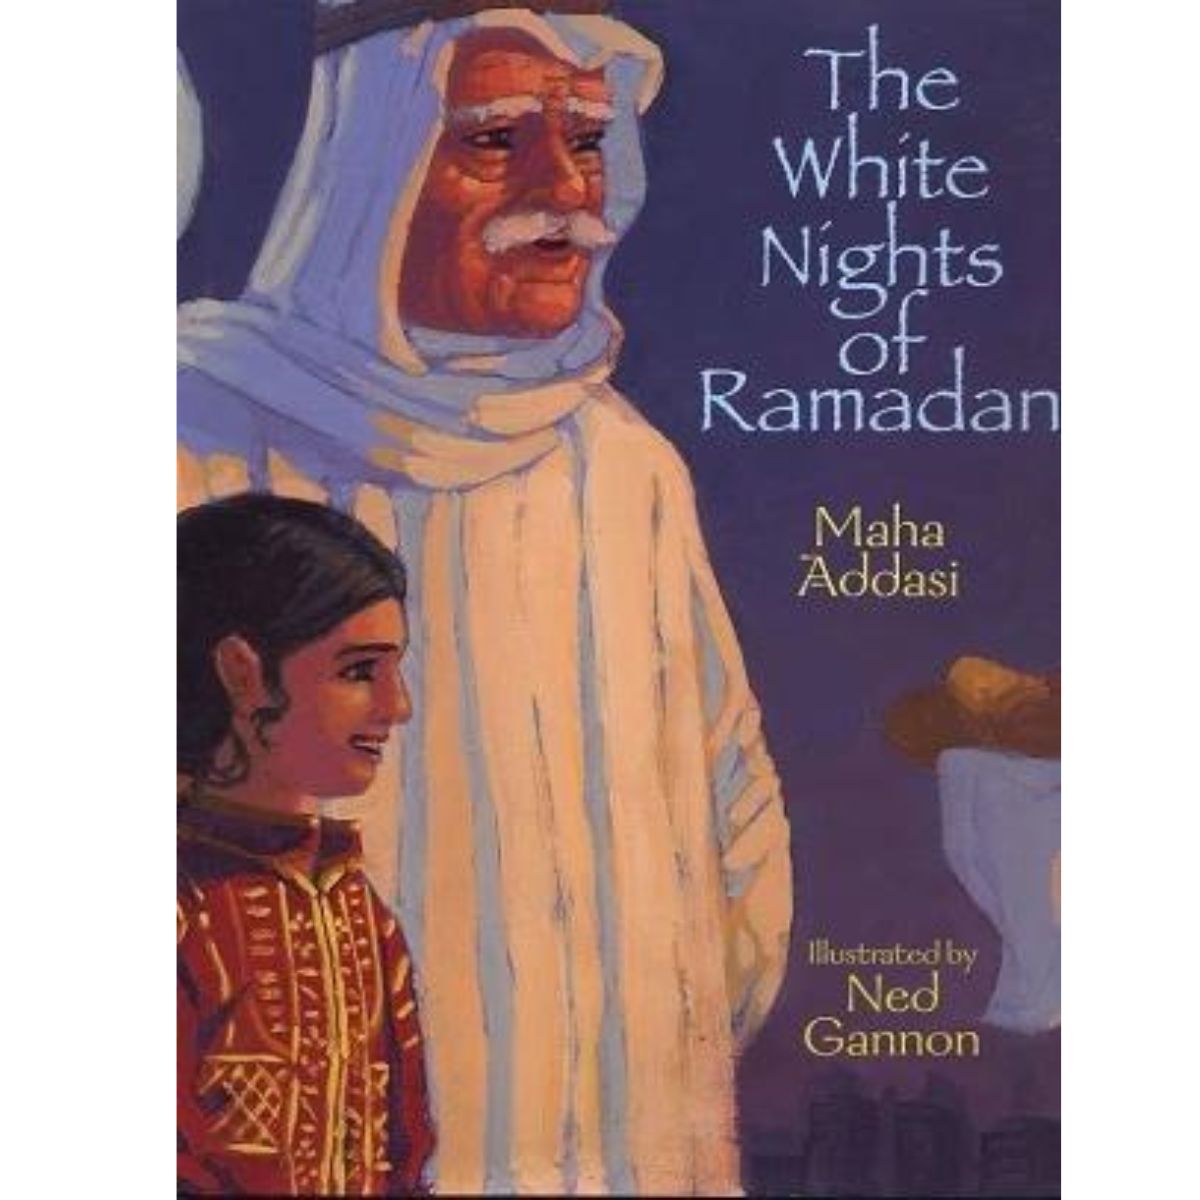 The White Nights of Ramadan